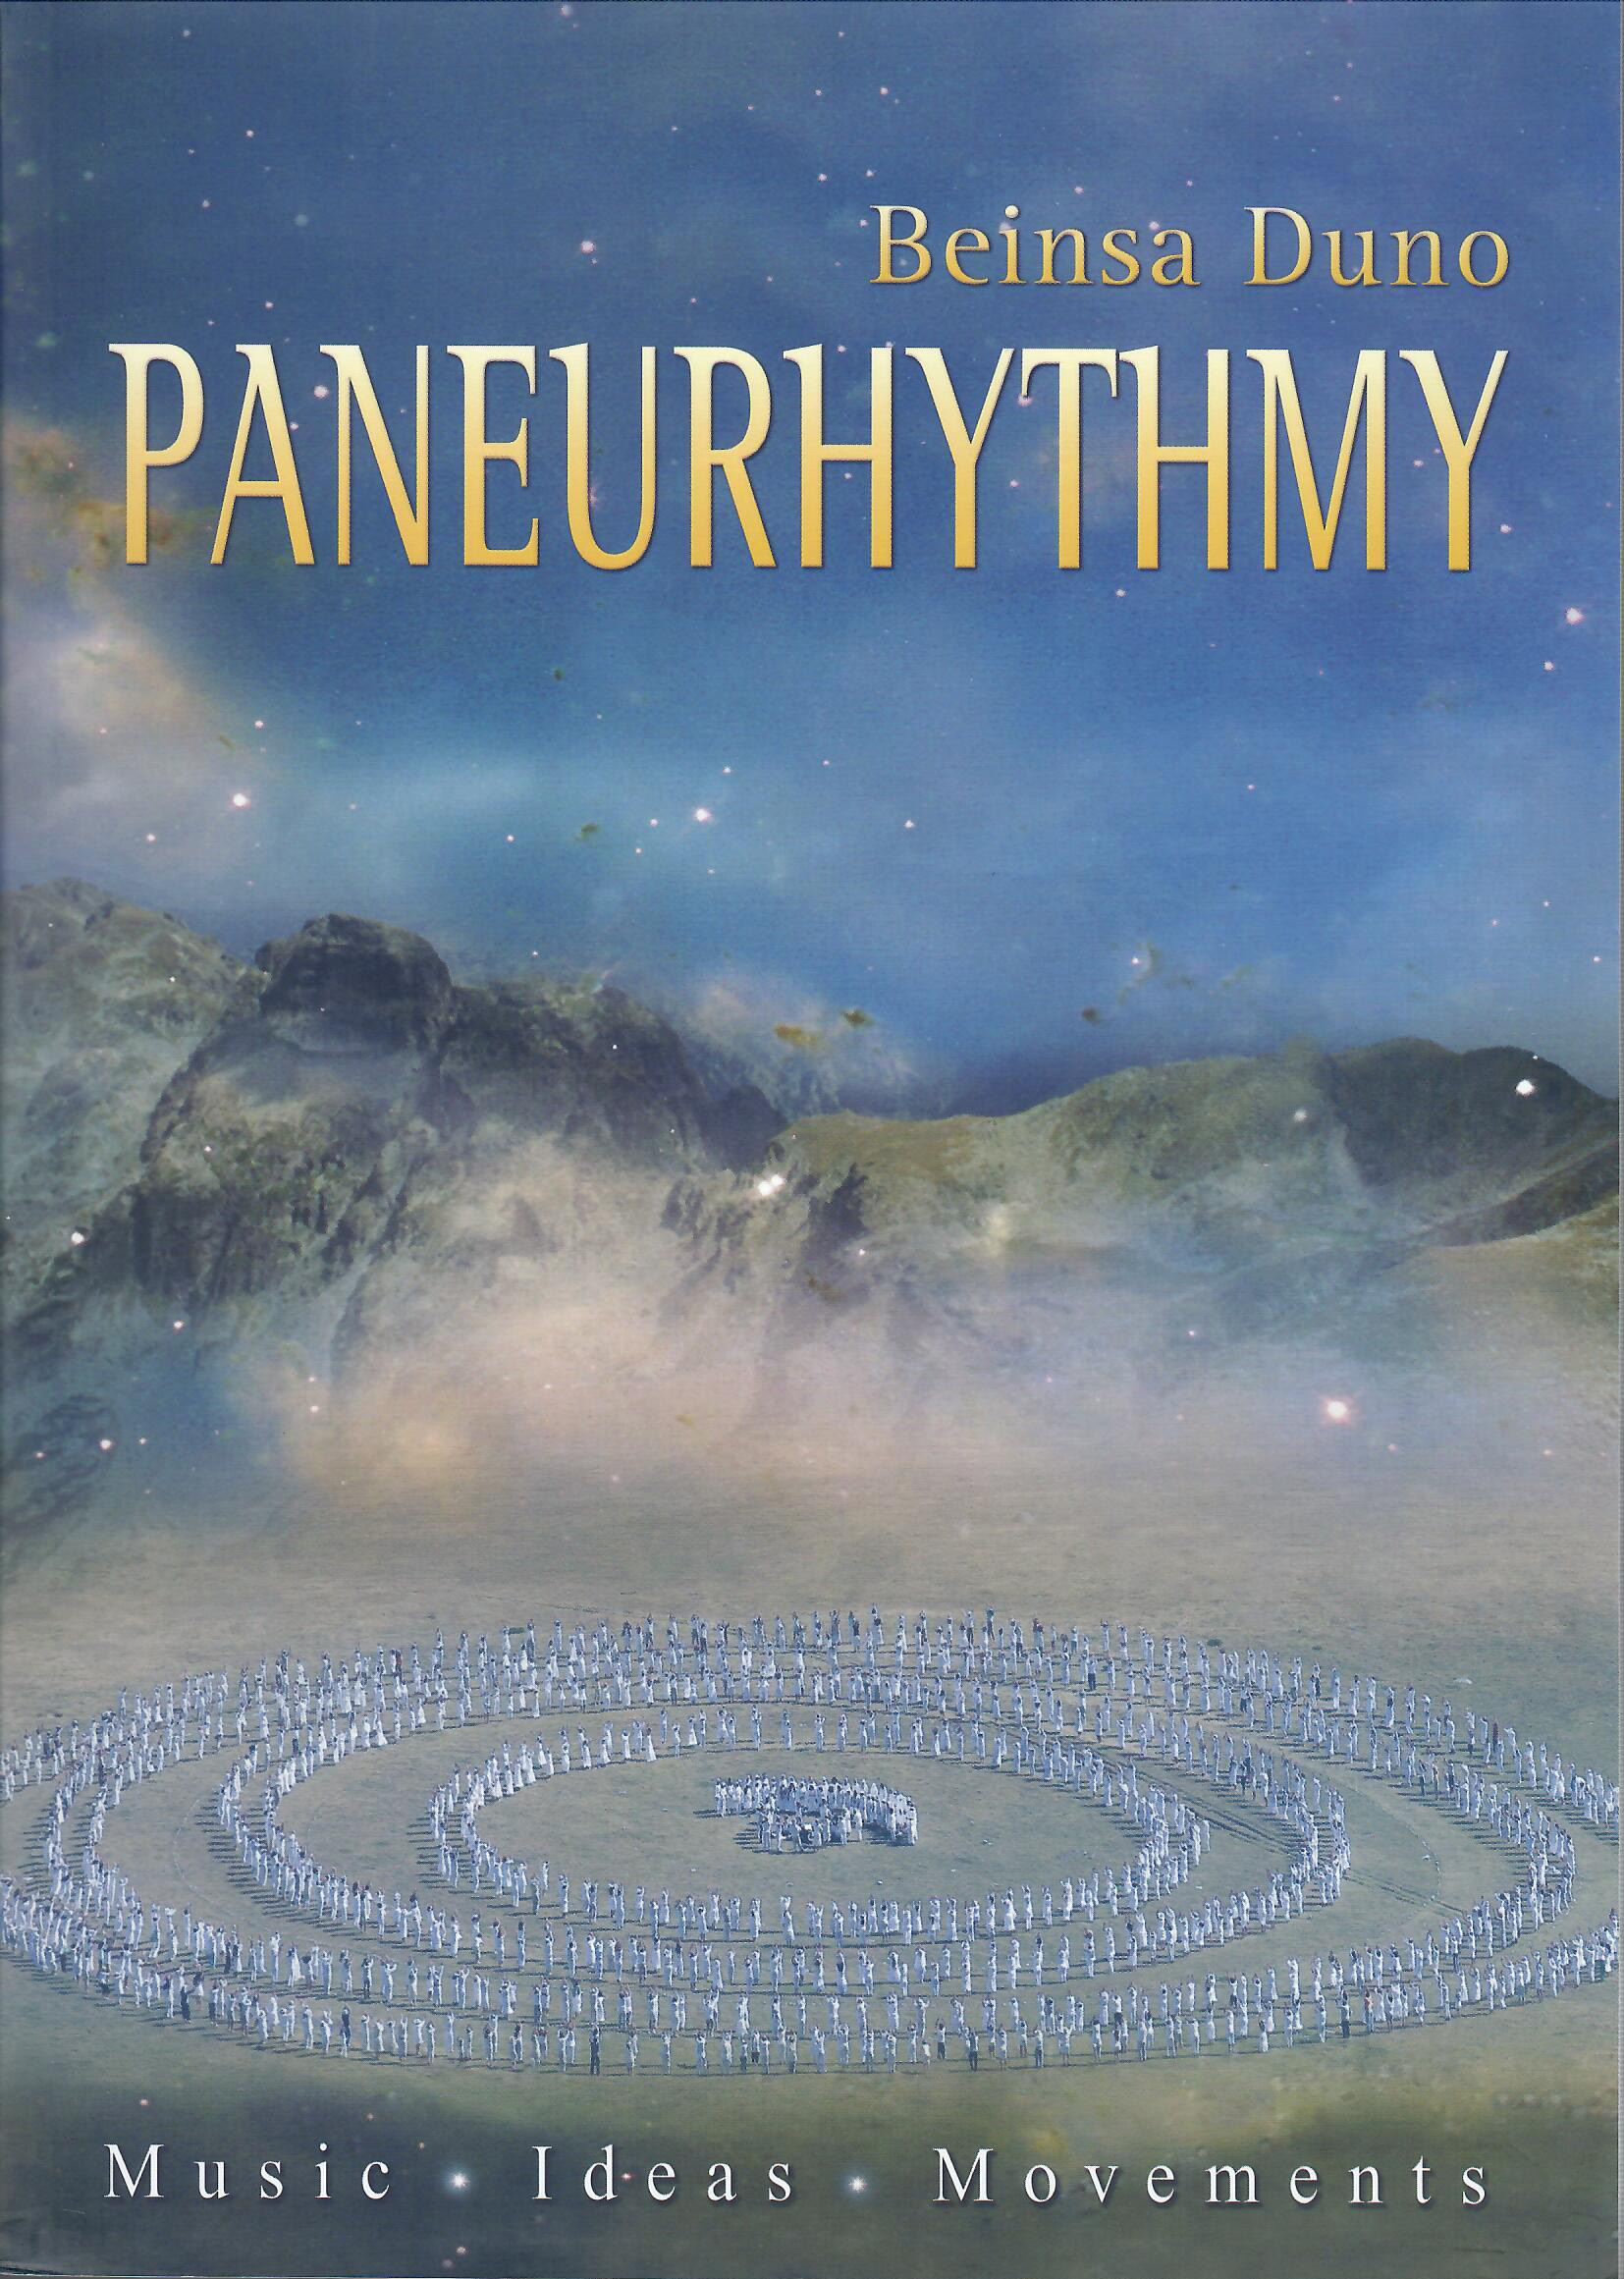 Paneurhythmy - Music, Ideas, Movements